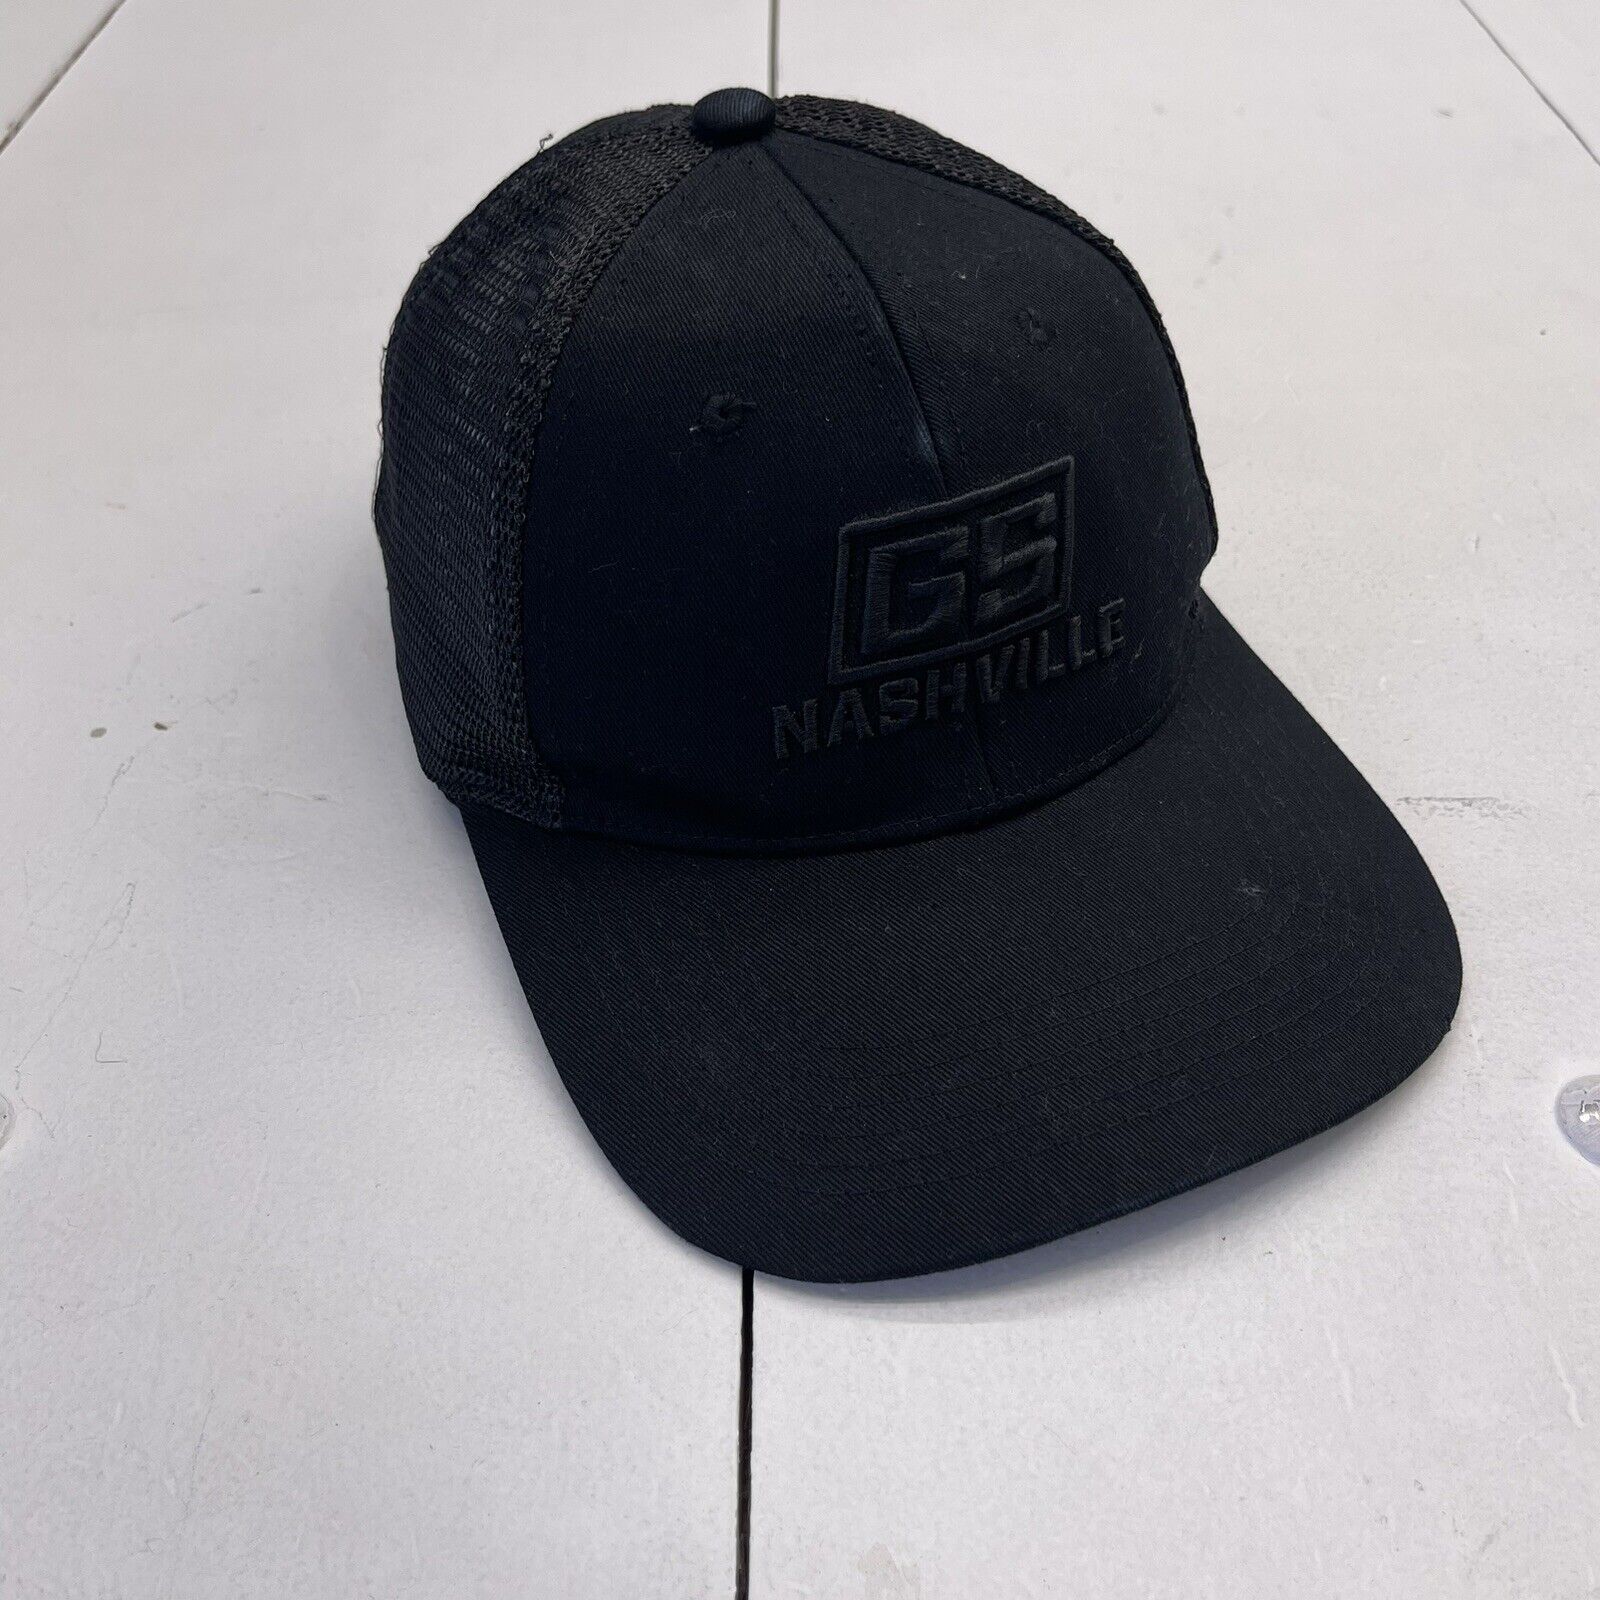 GS Nashville Black Mesh Back Trucker Hat Adults Size OS